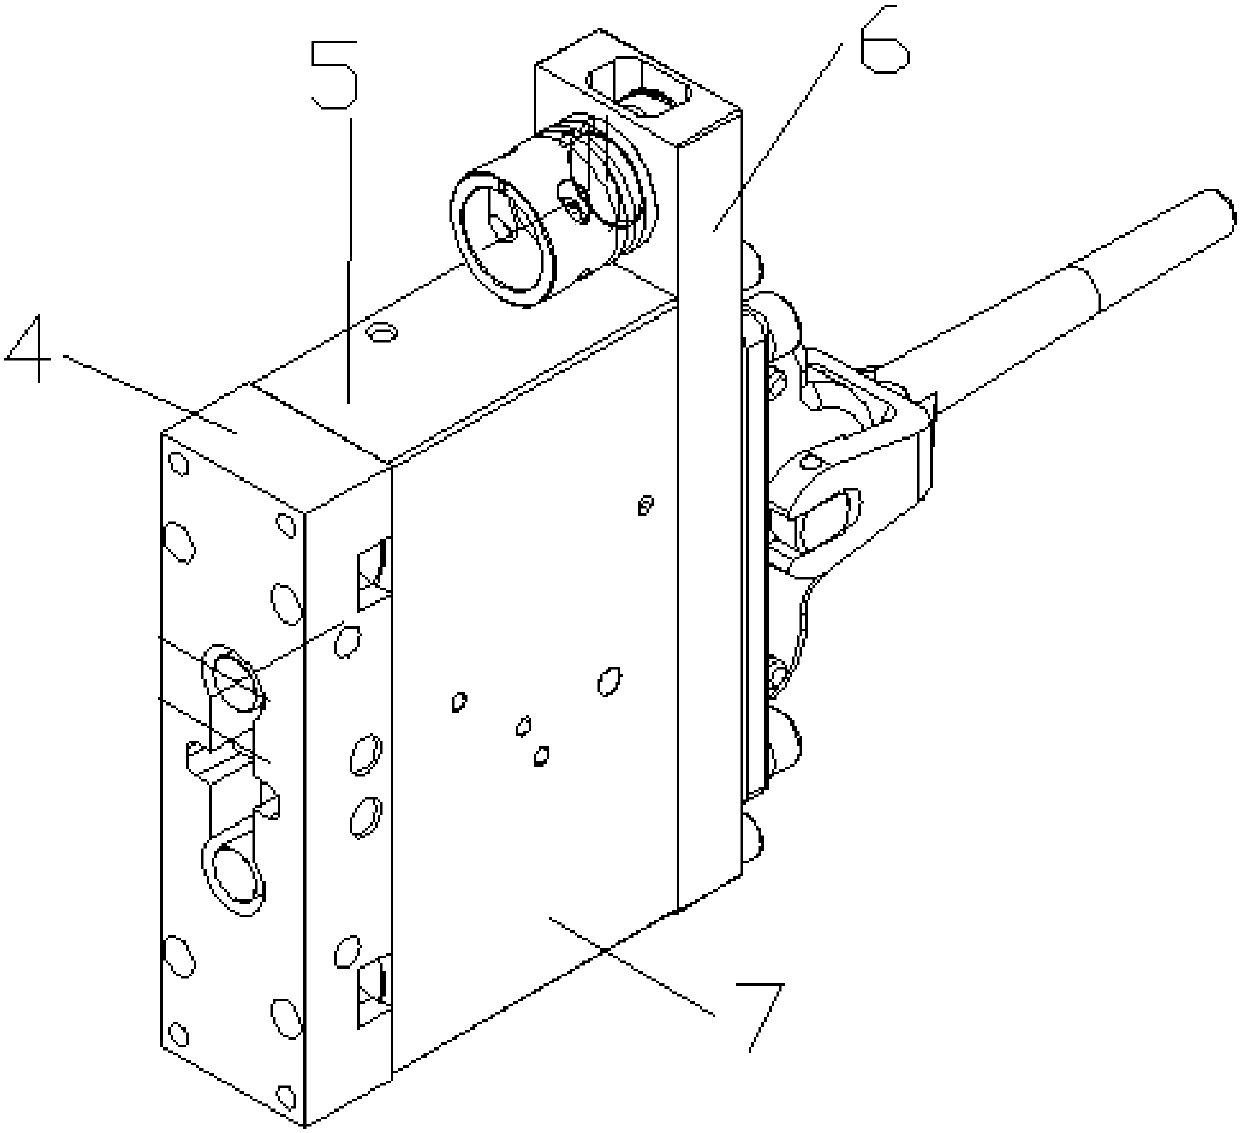 An automatic transformation method of manual reversing valve